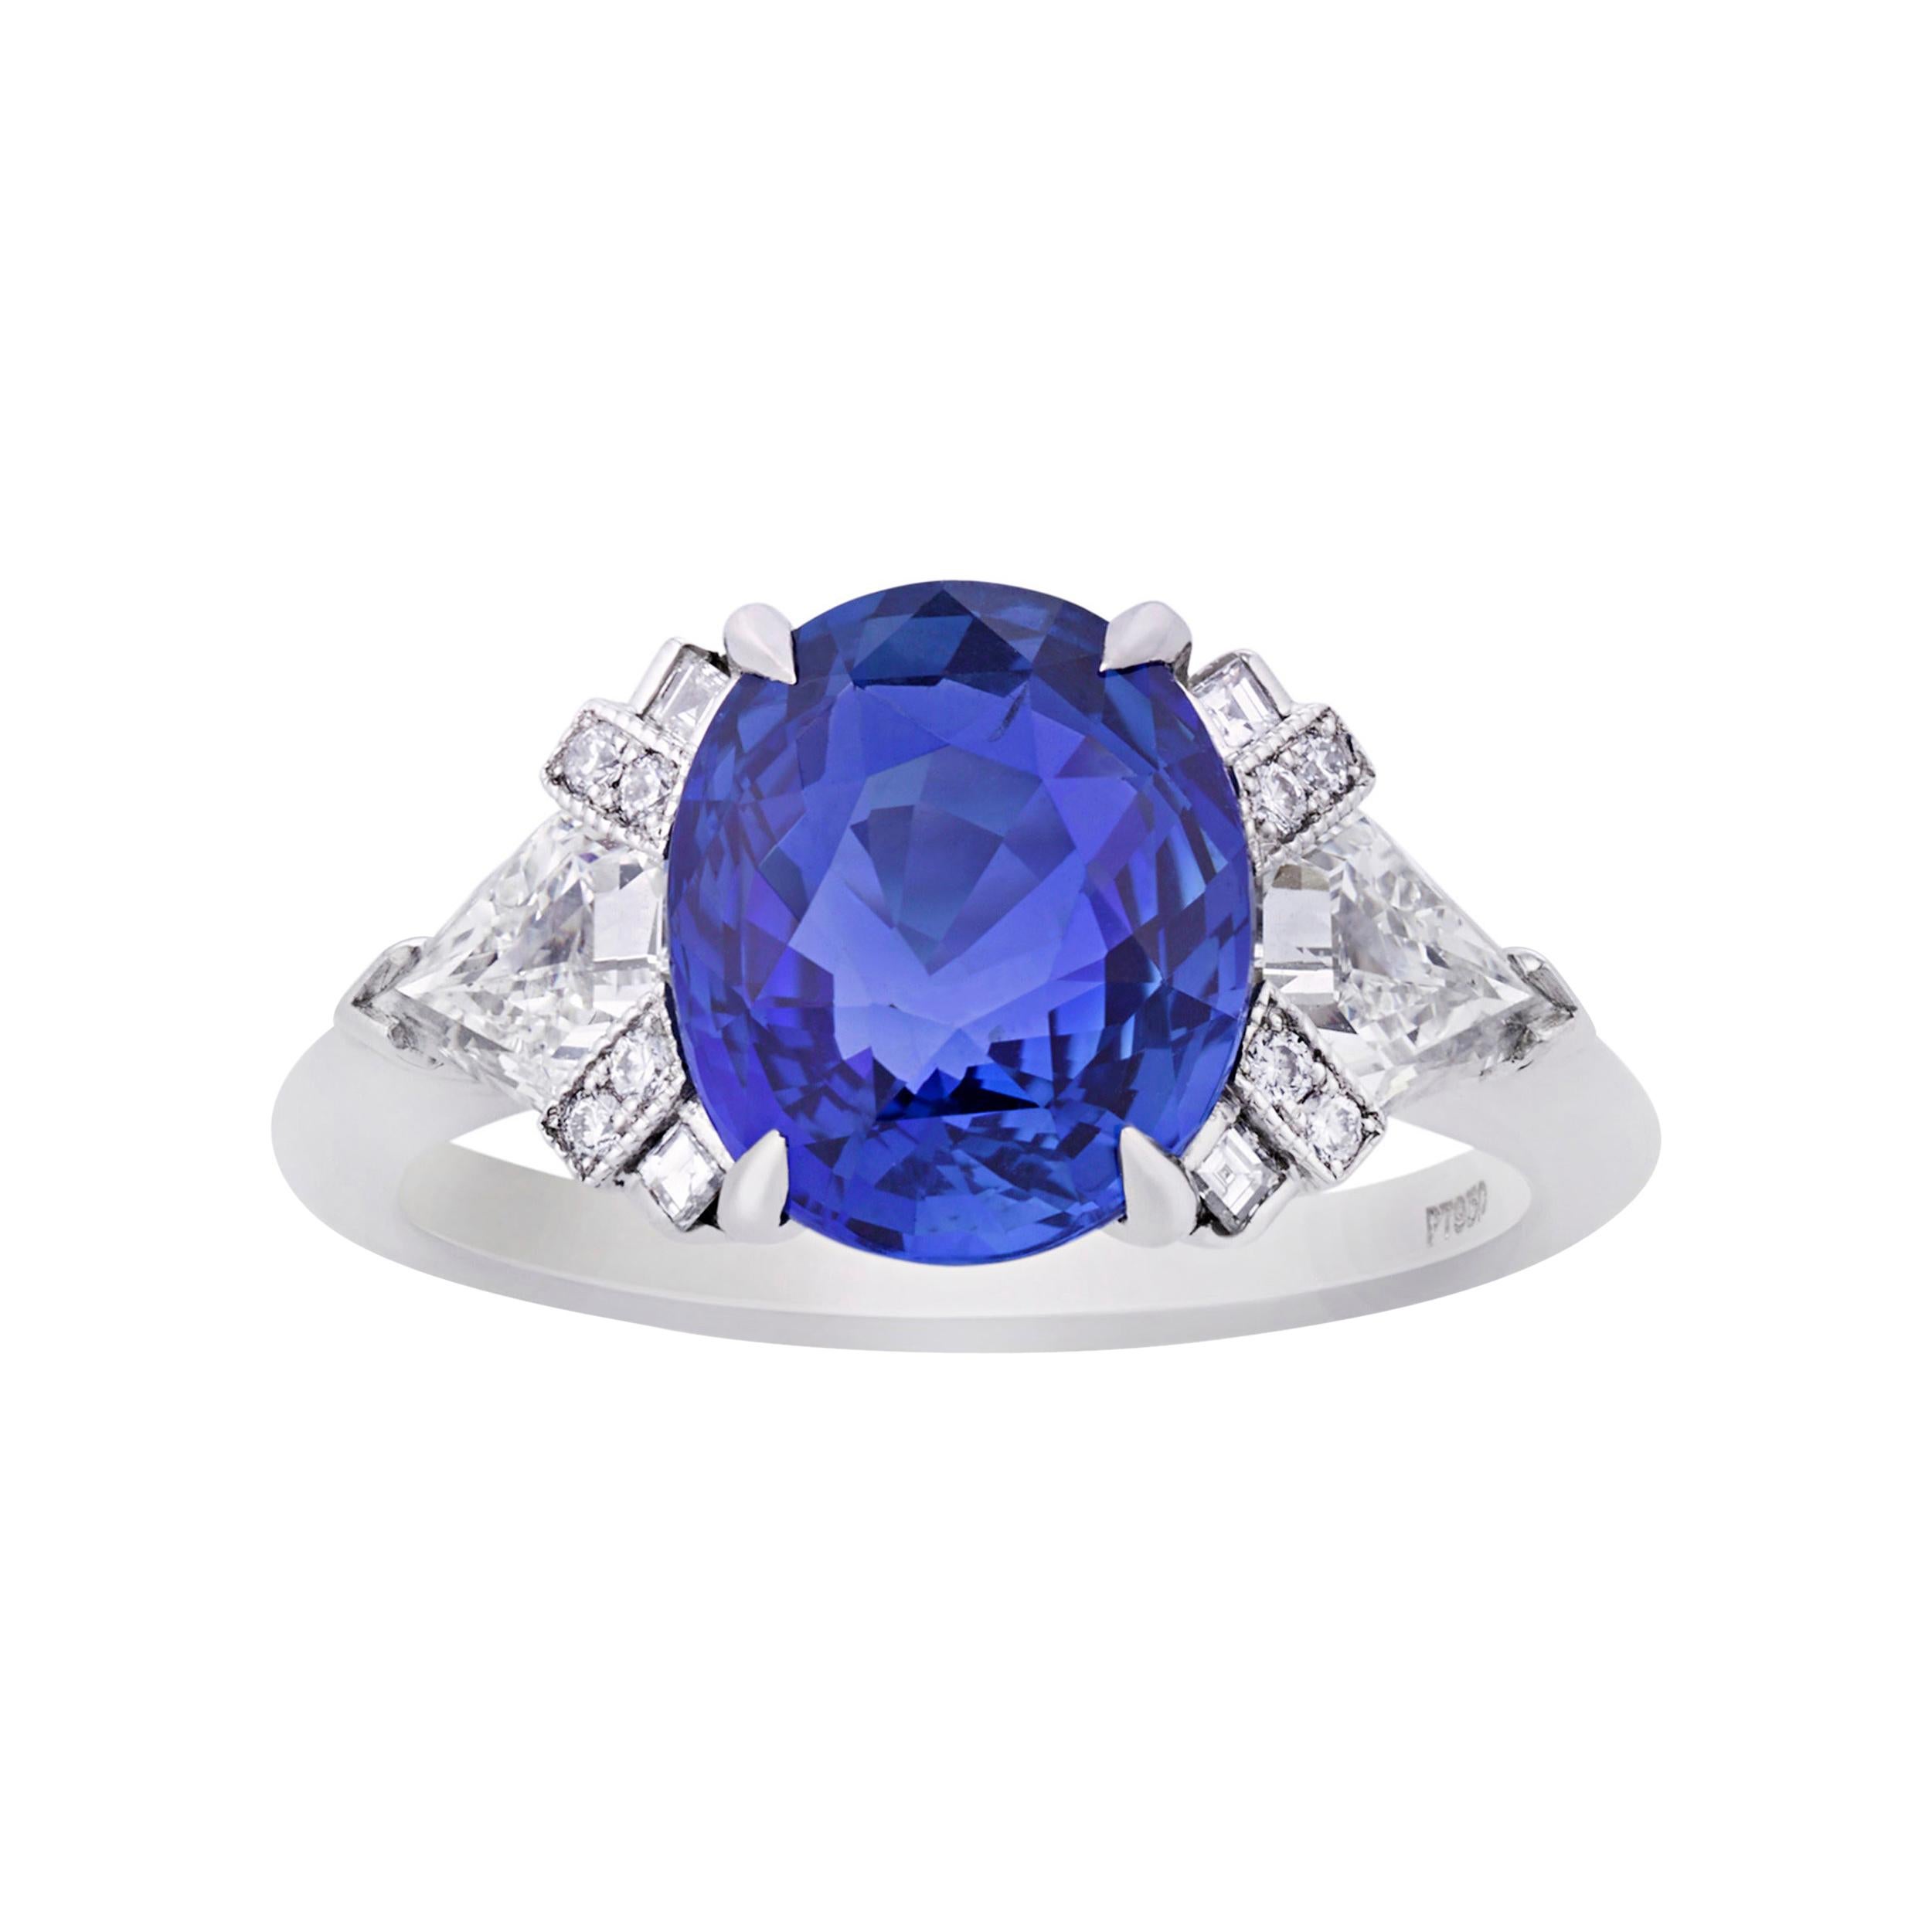 Untreated Sapphire Ring by Raymond Yard, 4.07 Carats